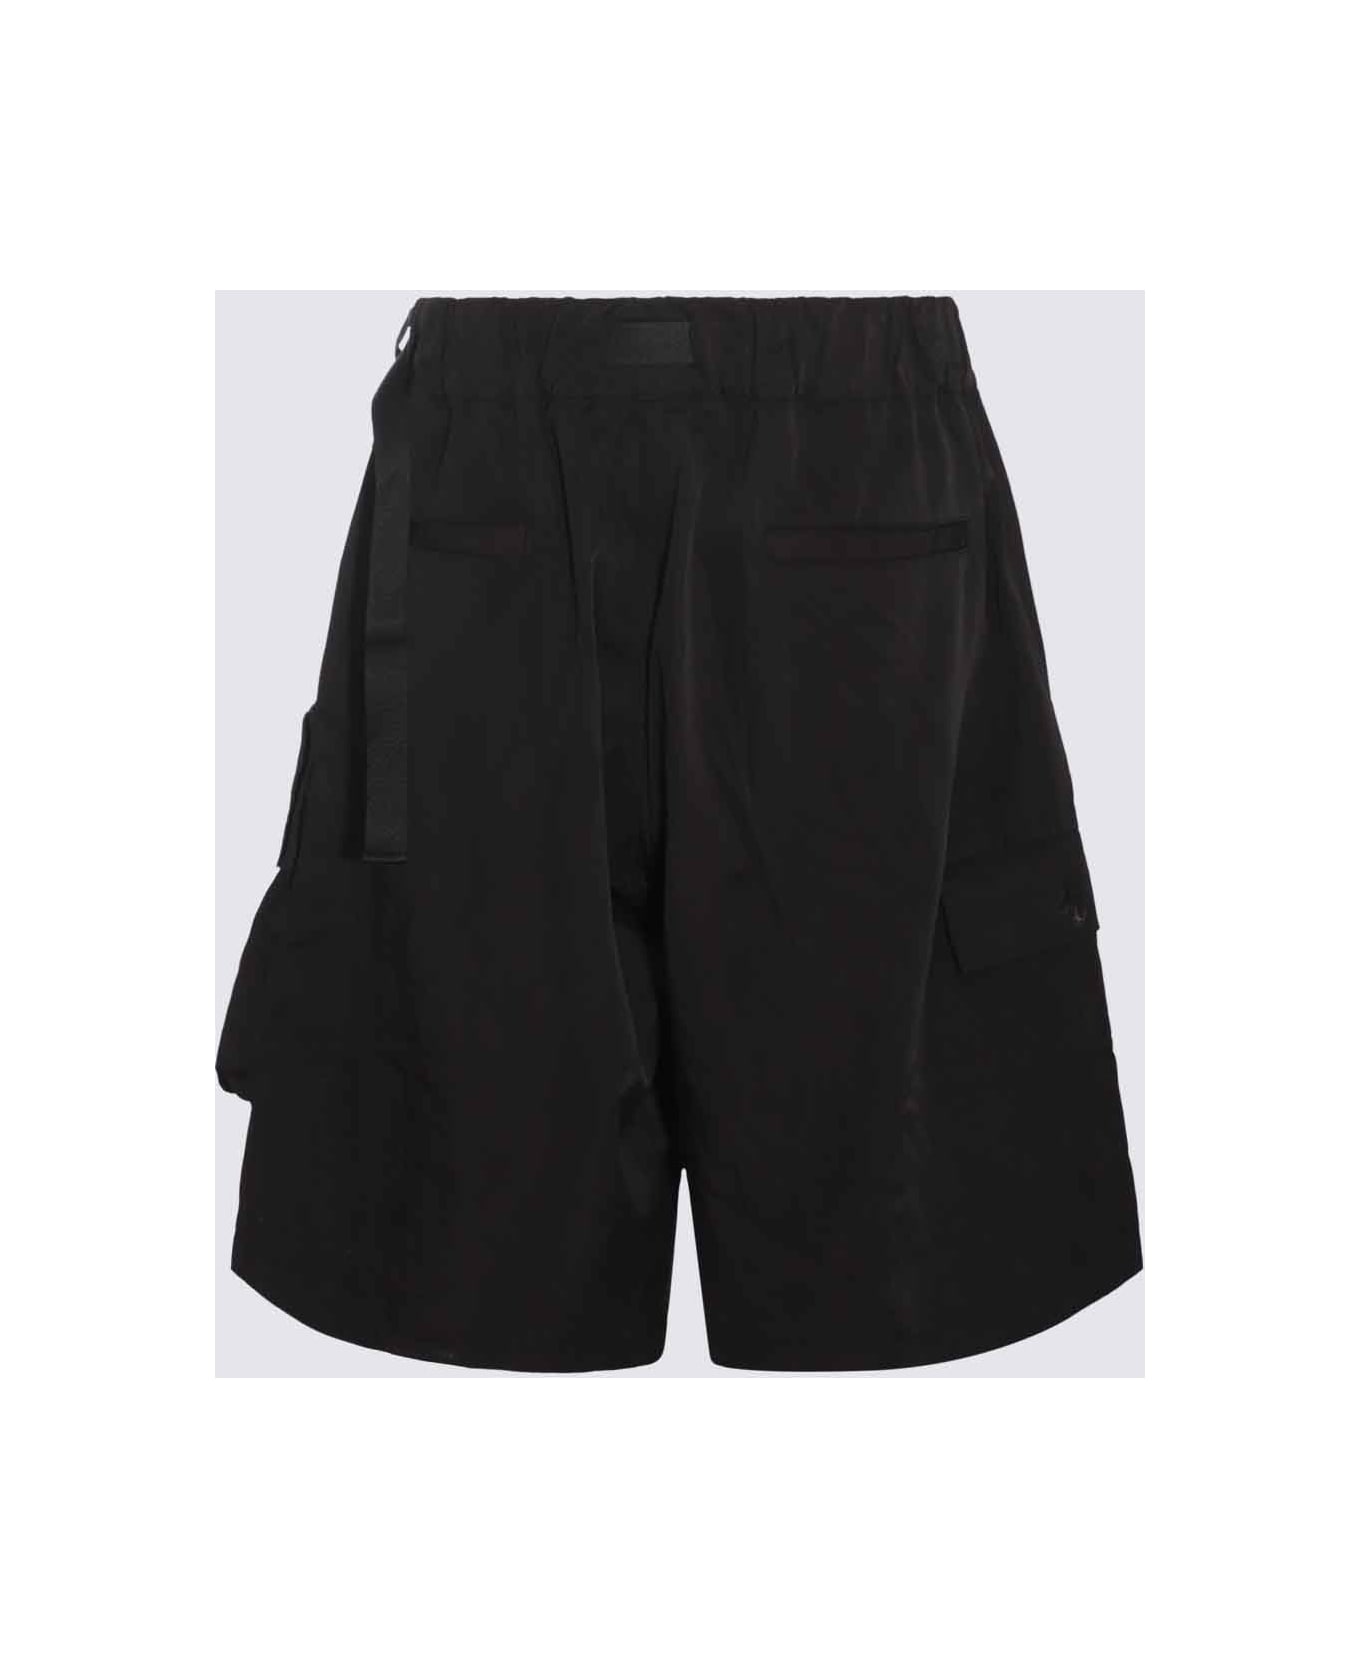 Y-3 Black Shorts - Black ショートパンツ